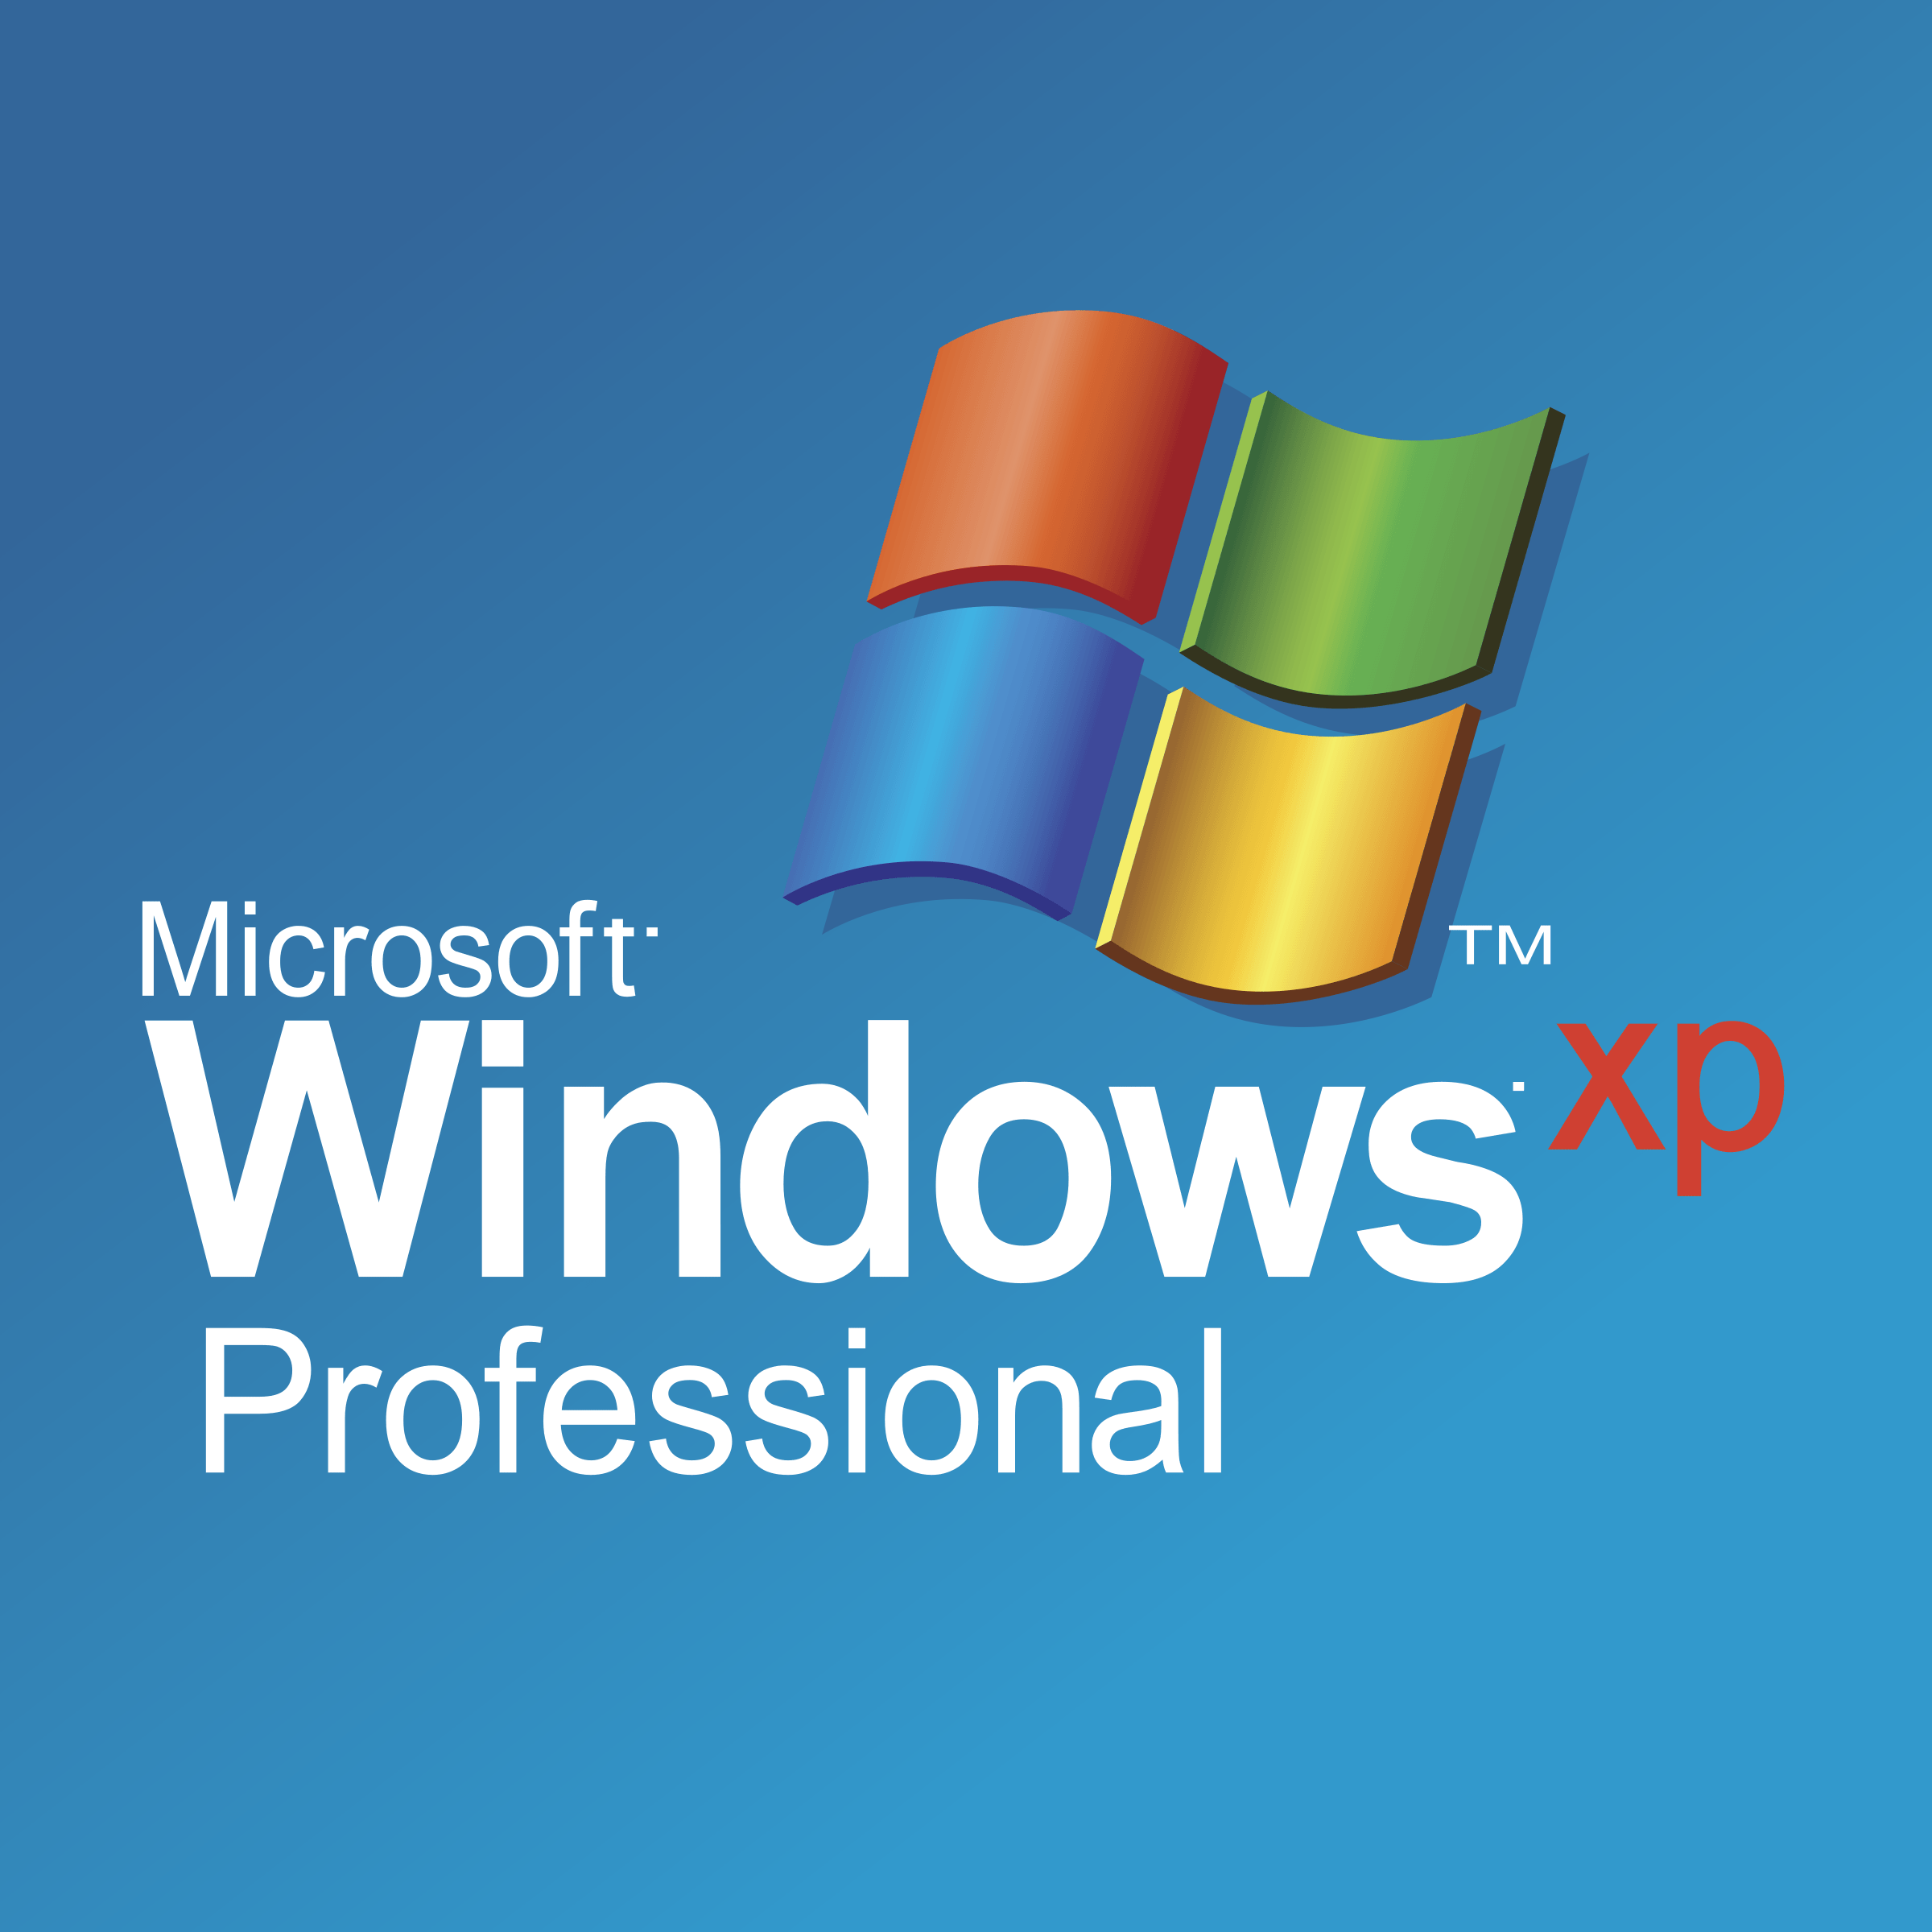 XP Logo - Microsoft Windows XP Professional Logo PNG Transparent & SVG Vector